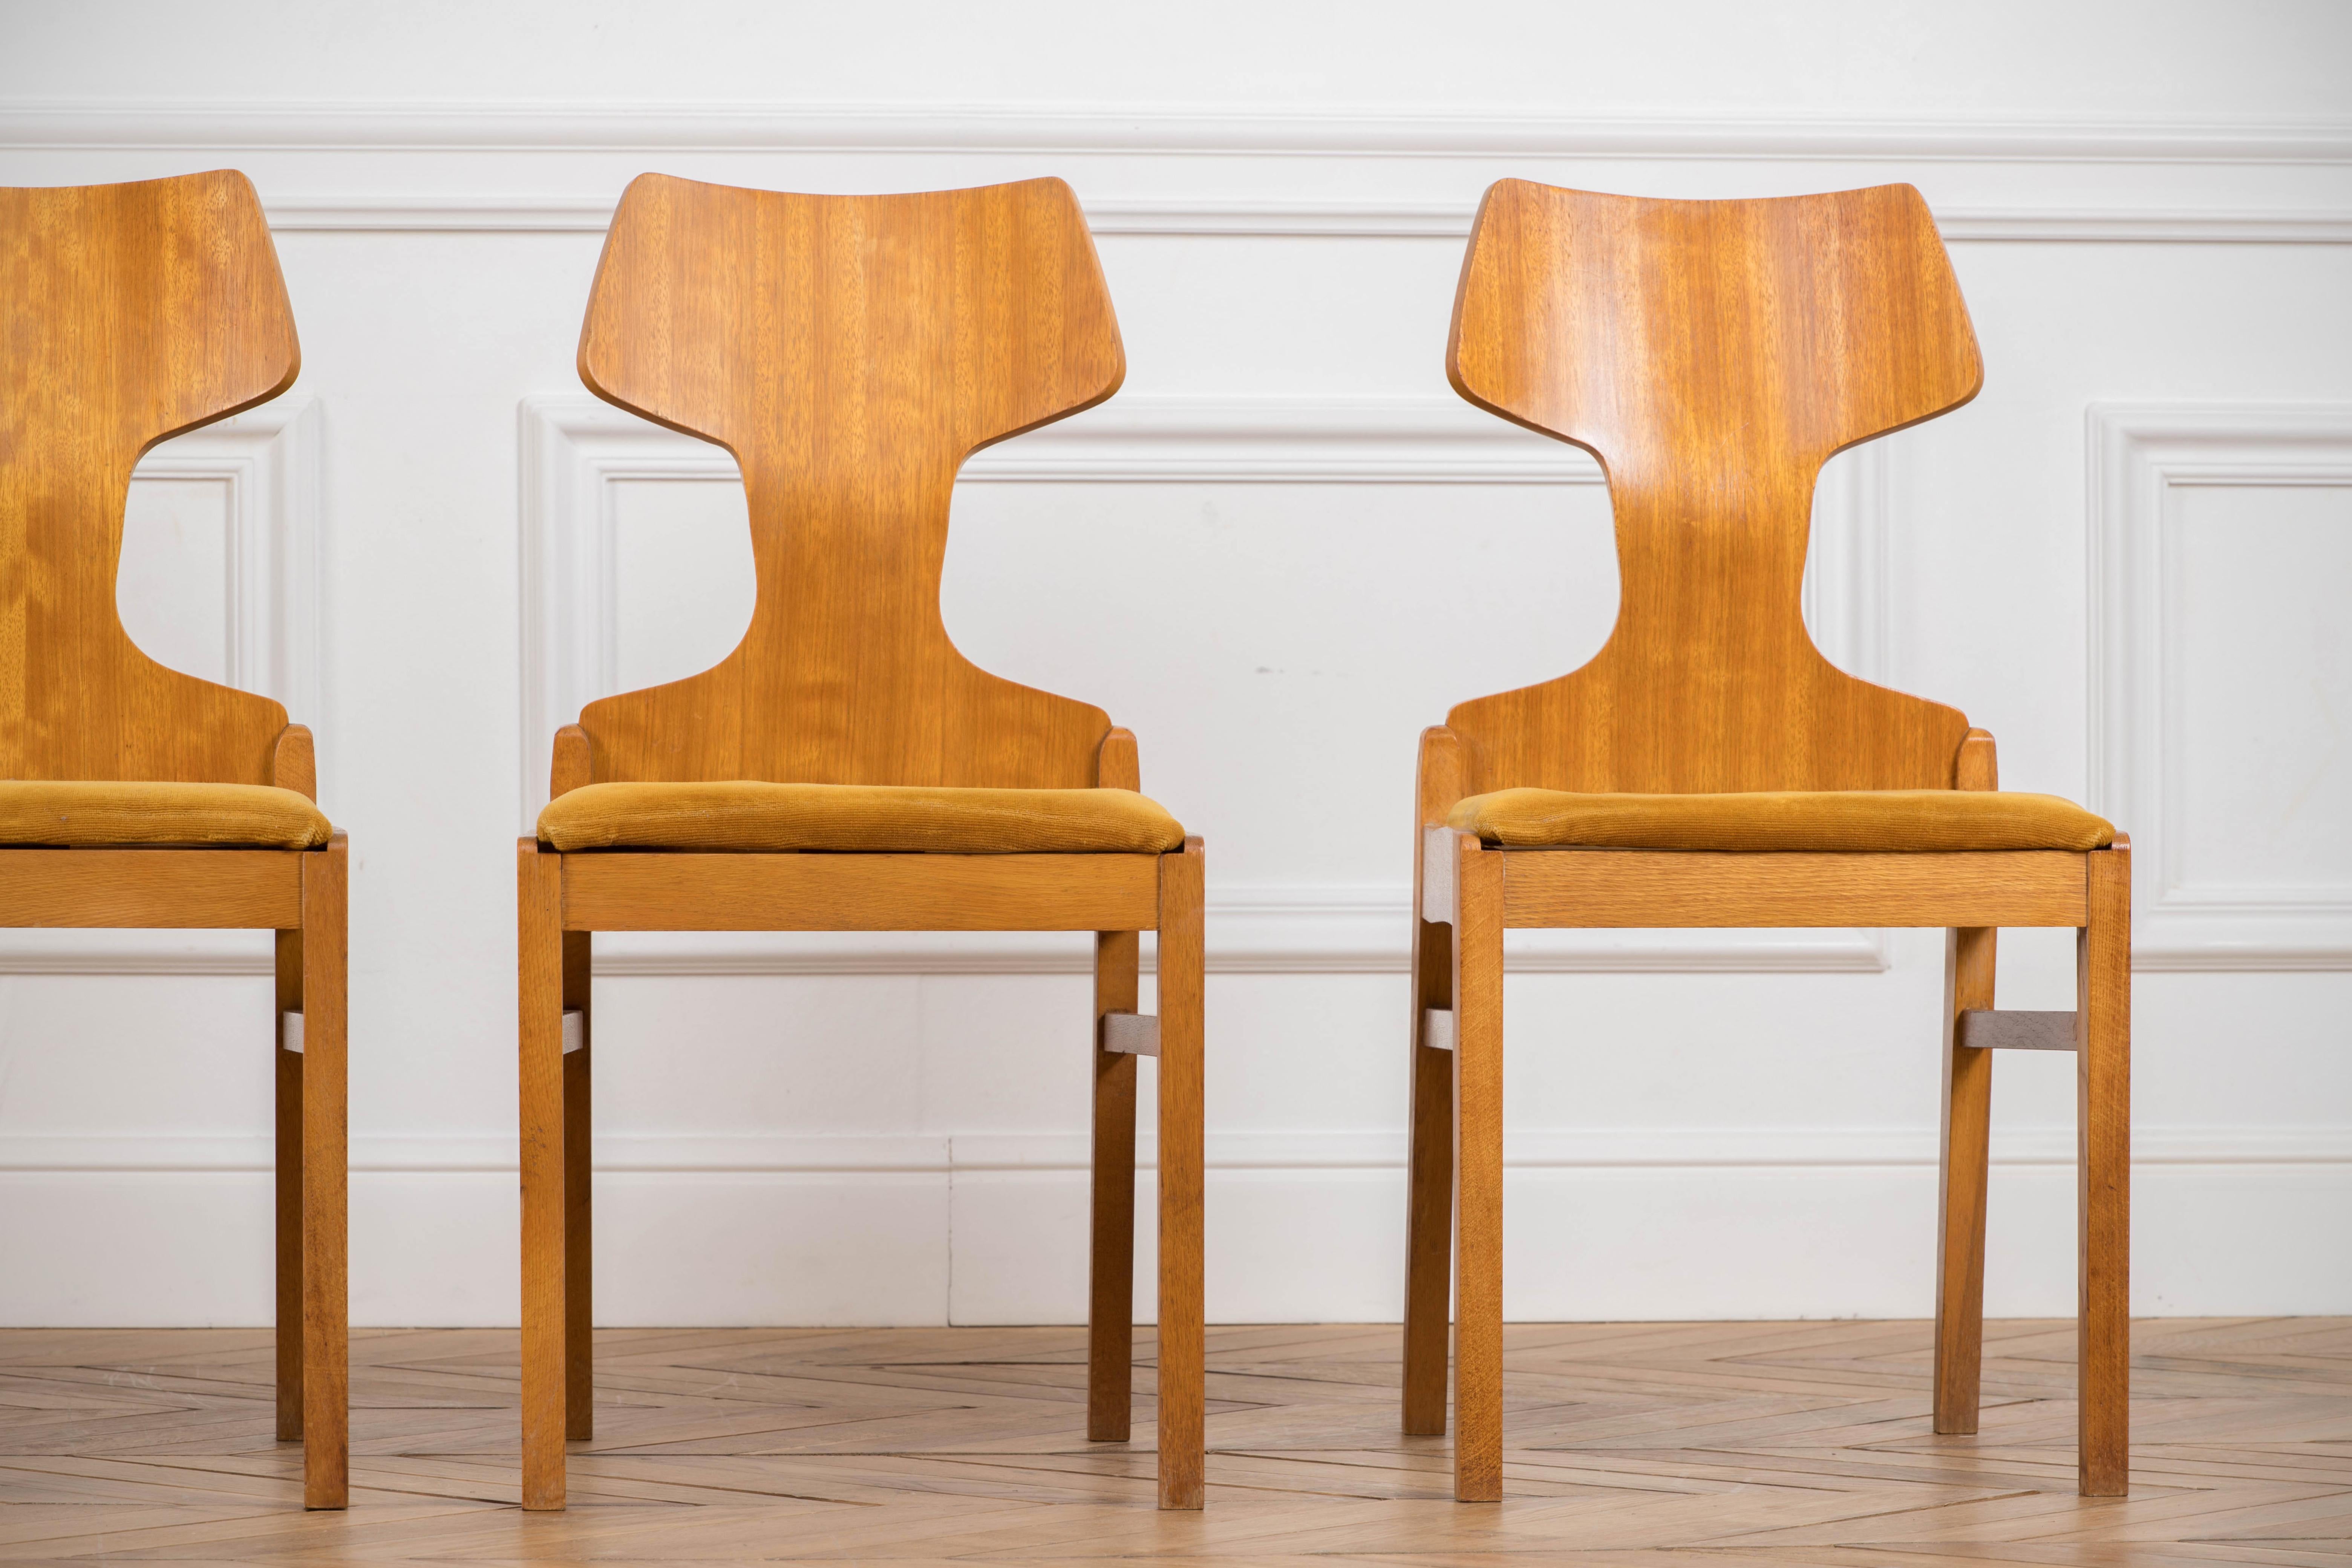 Retro Chairs Scandinavian Design 1960s by Alphons Loebenstein 1